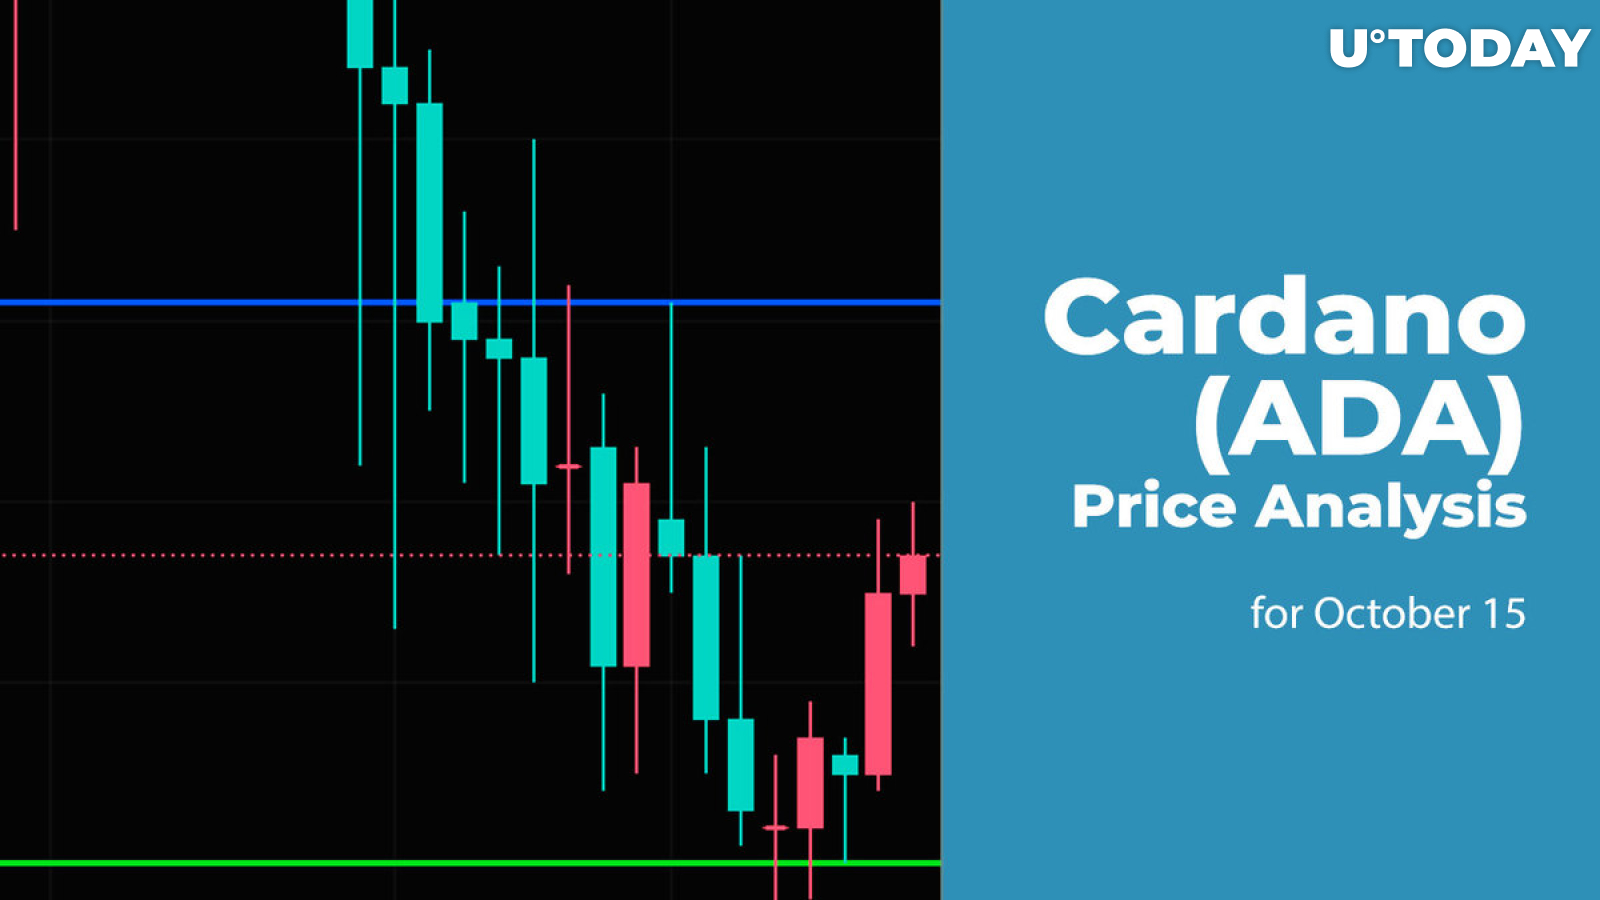 Cardano (ADA) Price Analysis for October 15